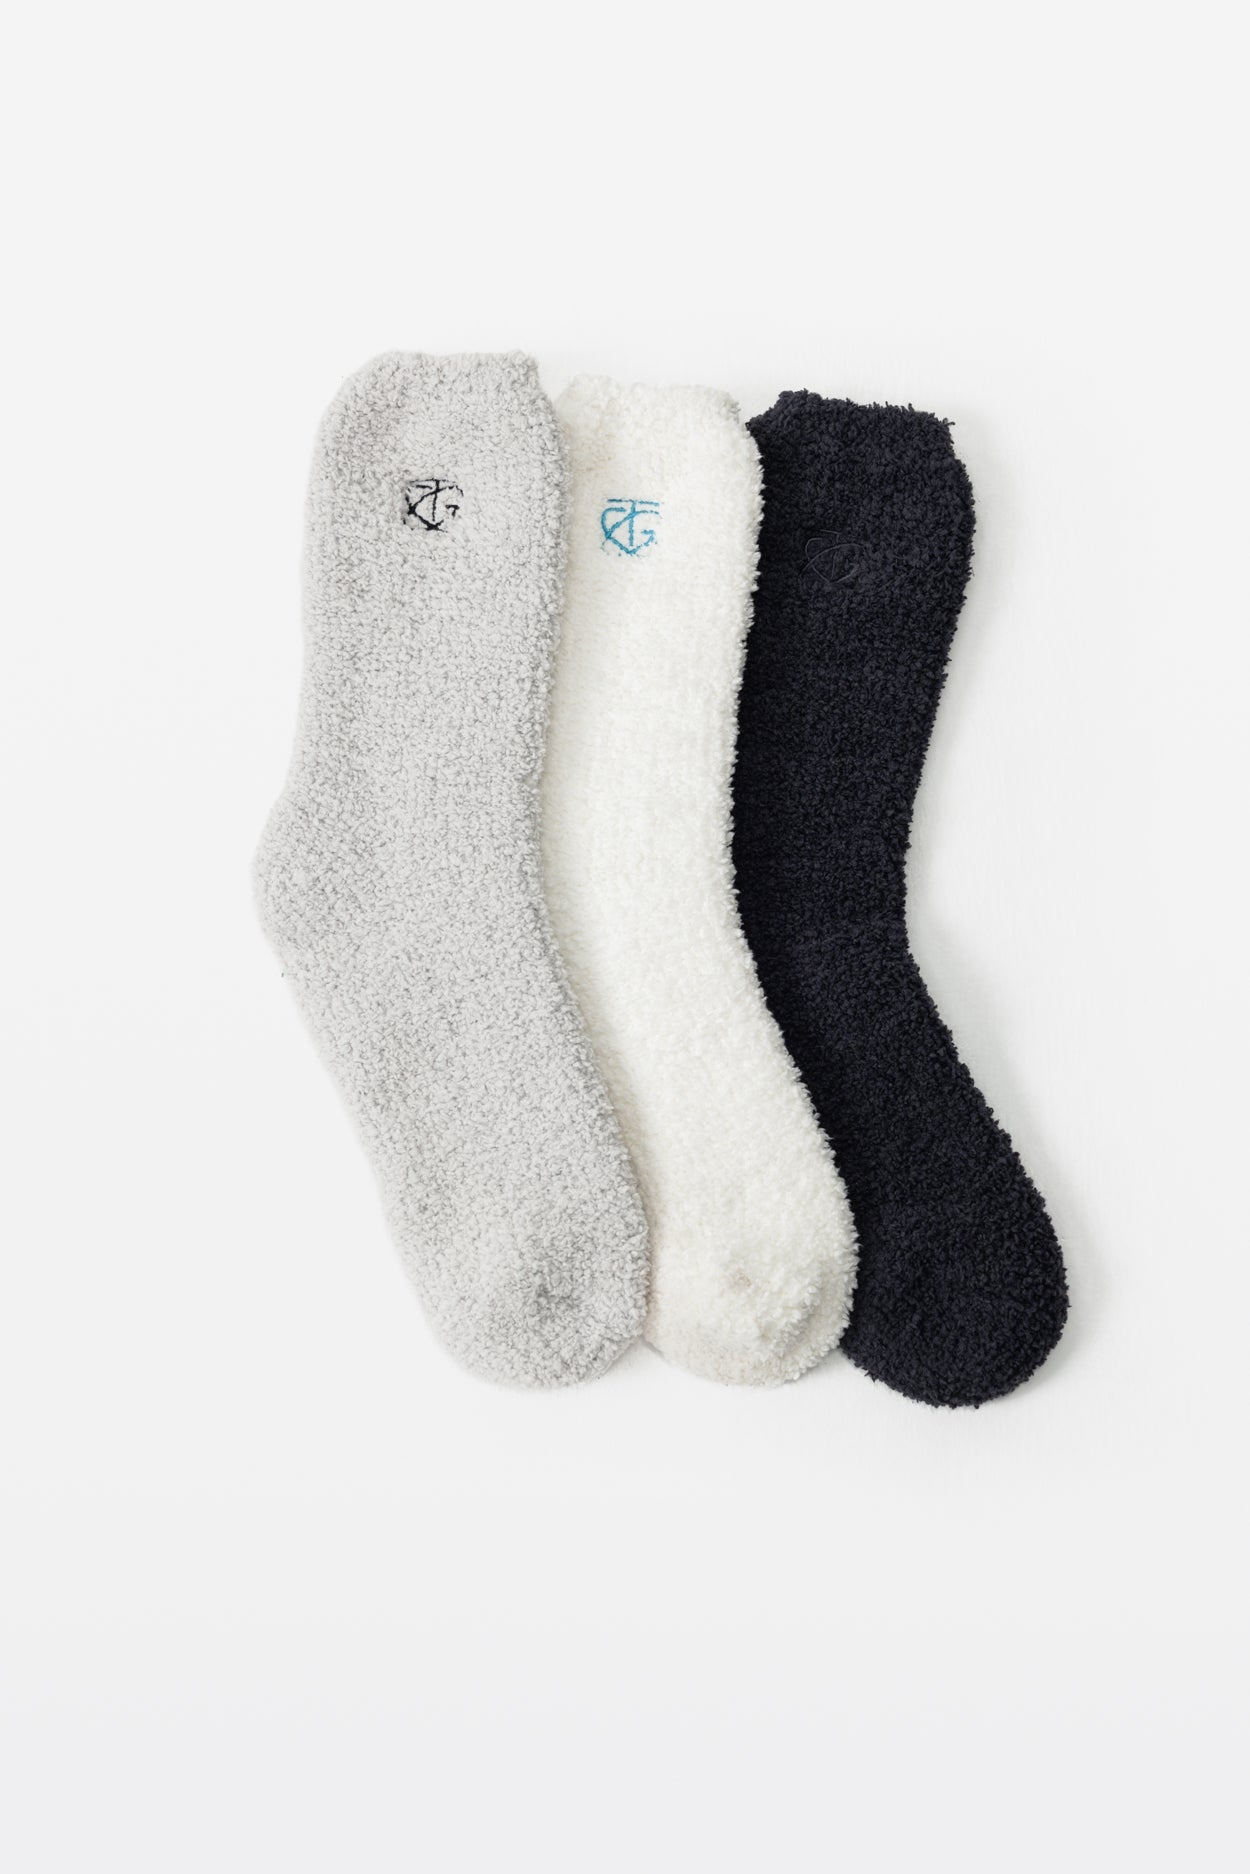 Ash Grey Soft Plush Socks - Socks - Touchofgod.co